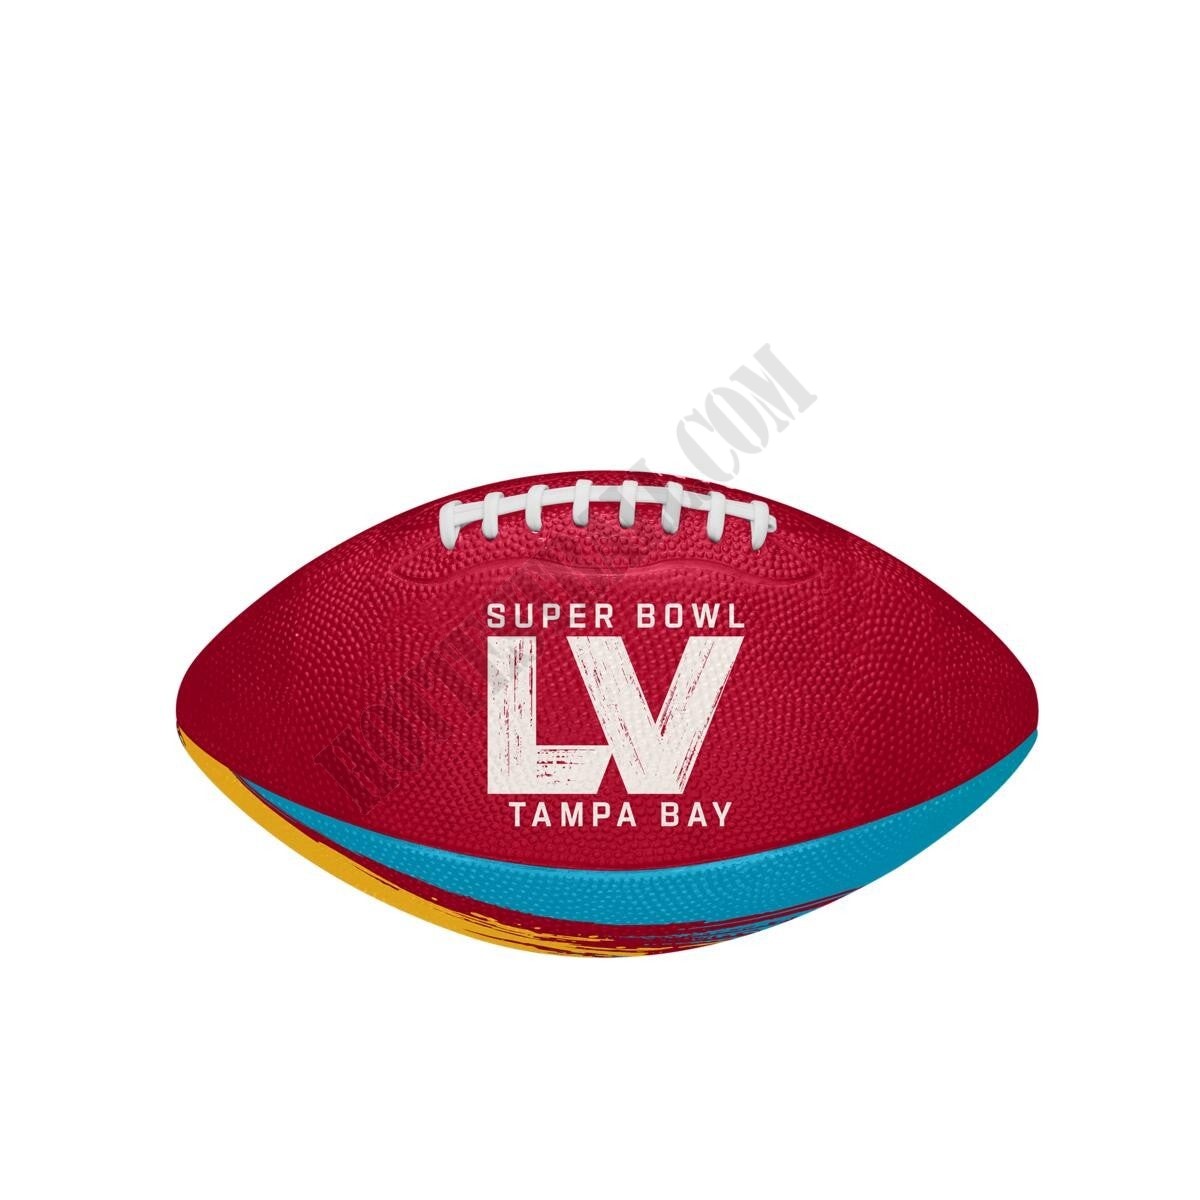 Super Bowl LV Junior All-Weather Football ● Wilson Promotions - Super Bowl LV Junior All-Weather Football ● Wilson Promotions